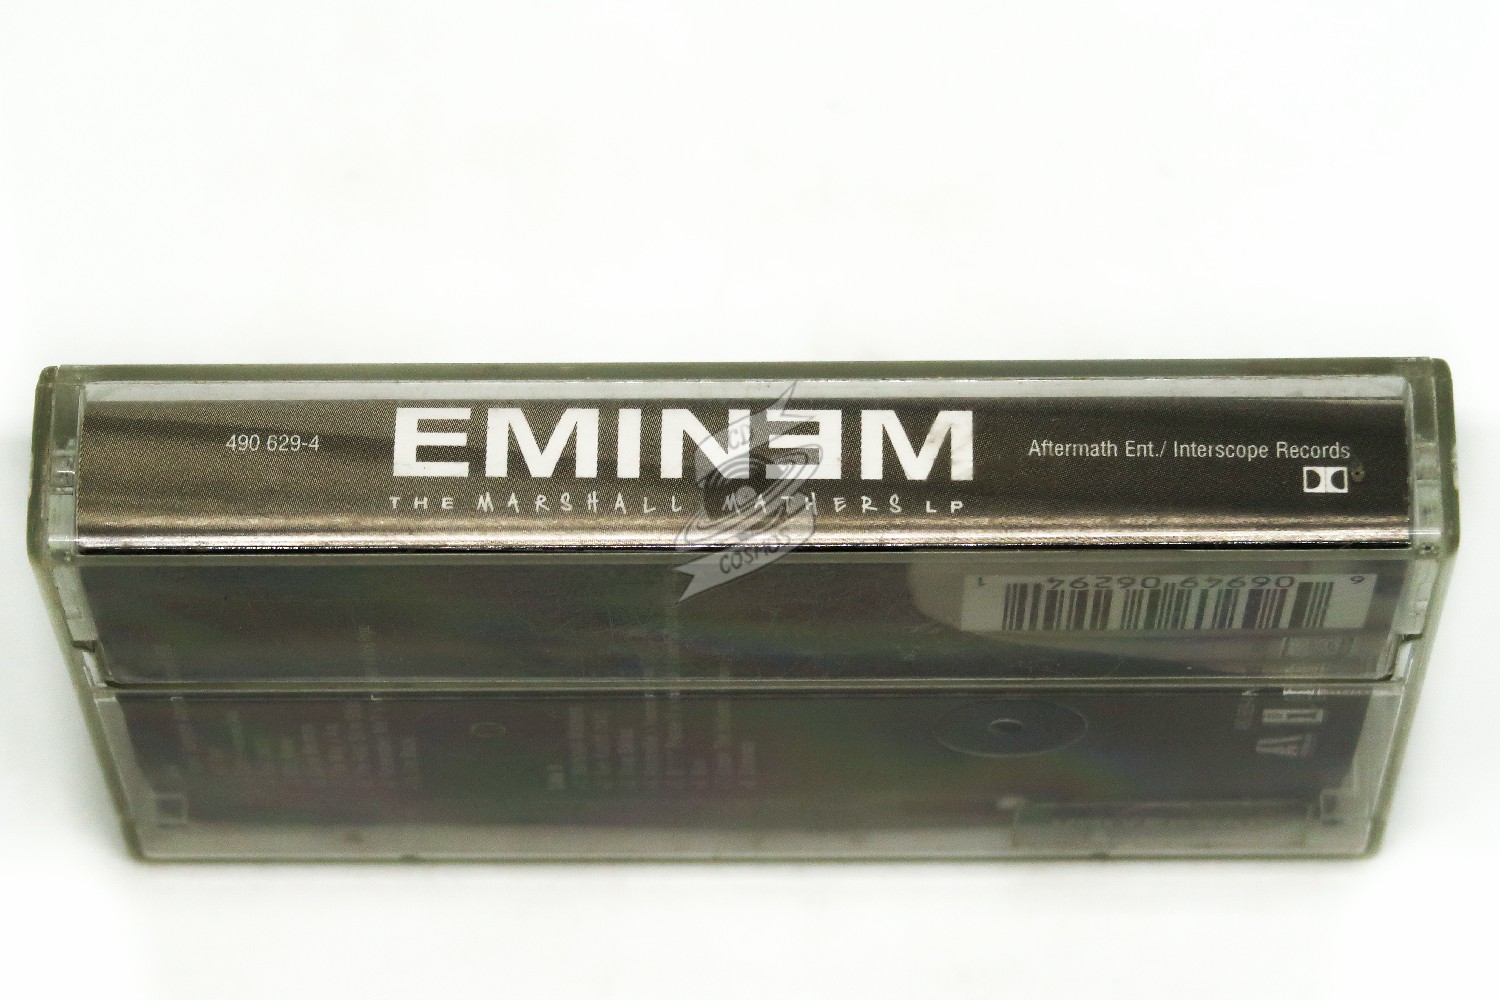 Eminem - The Marshall Mathers LP - cdcosmos